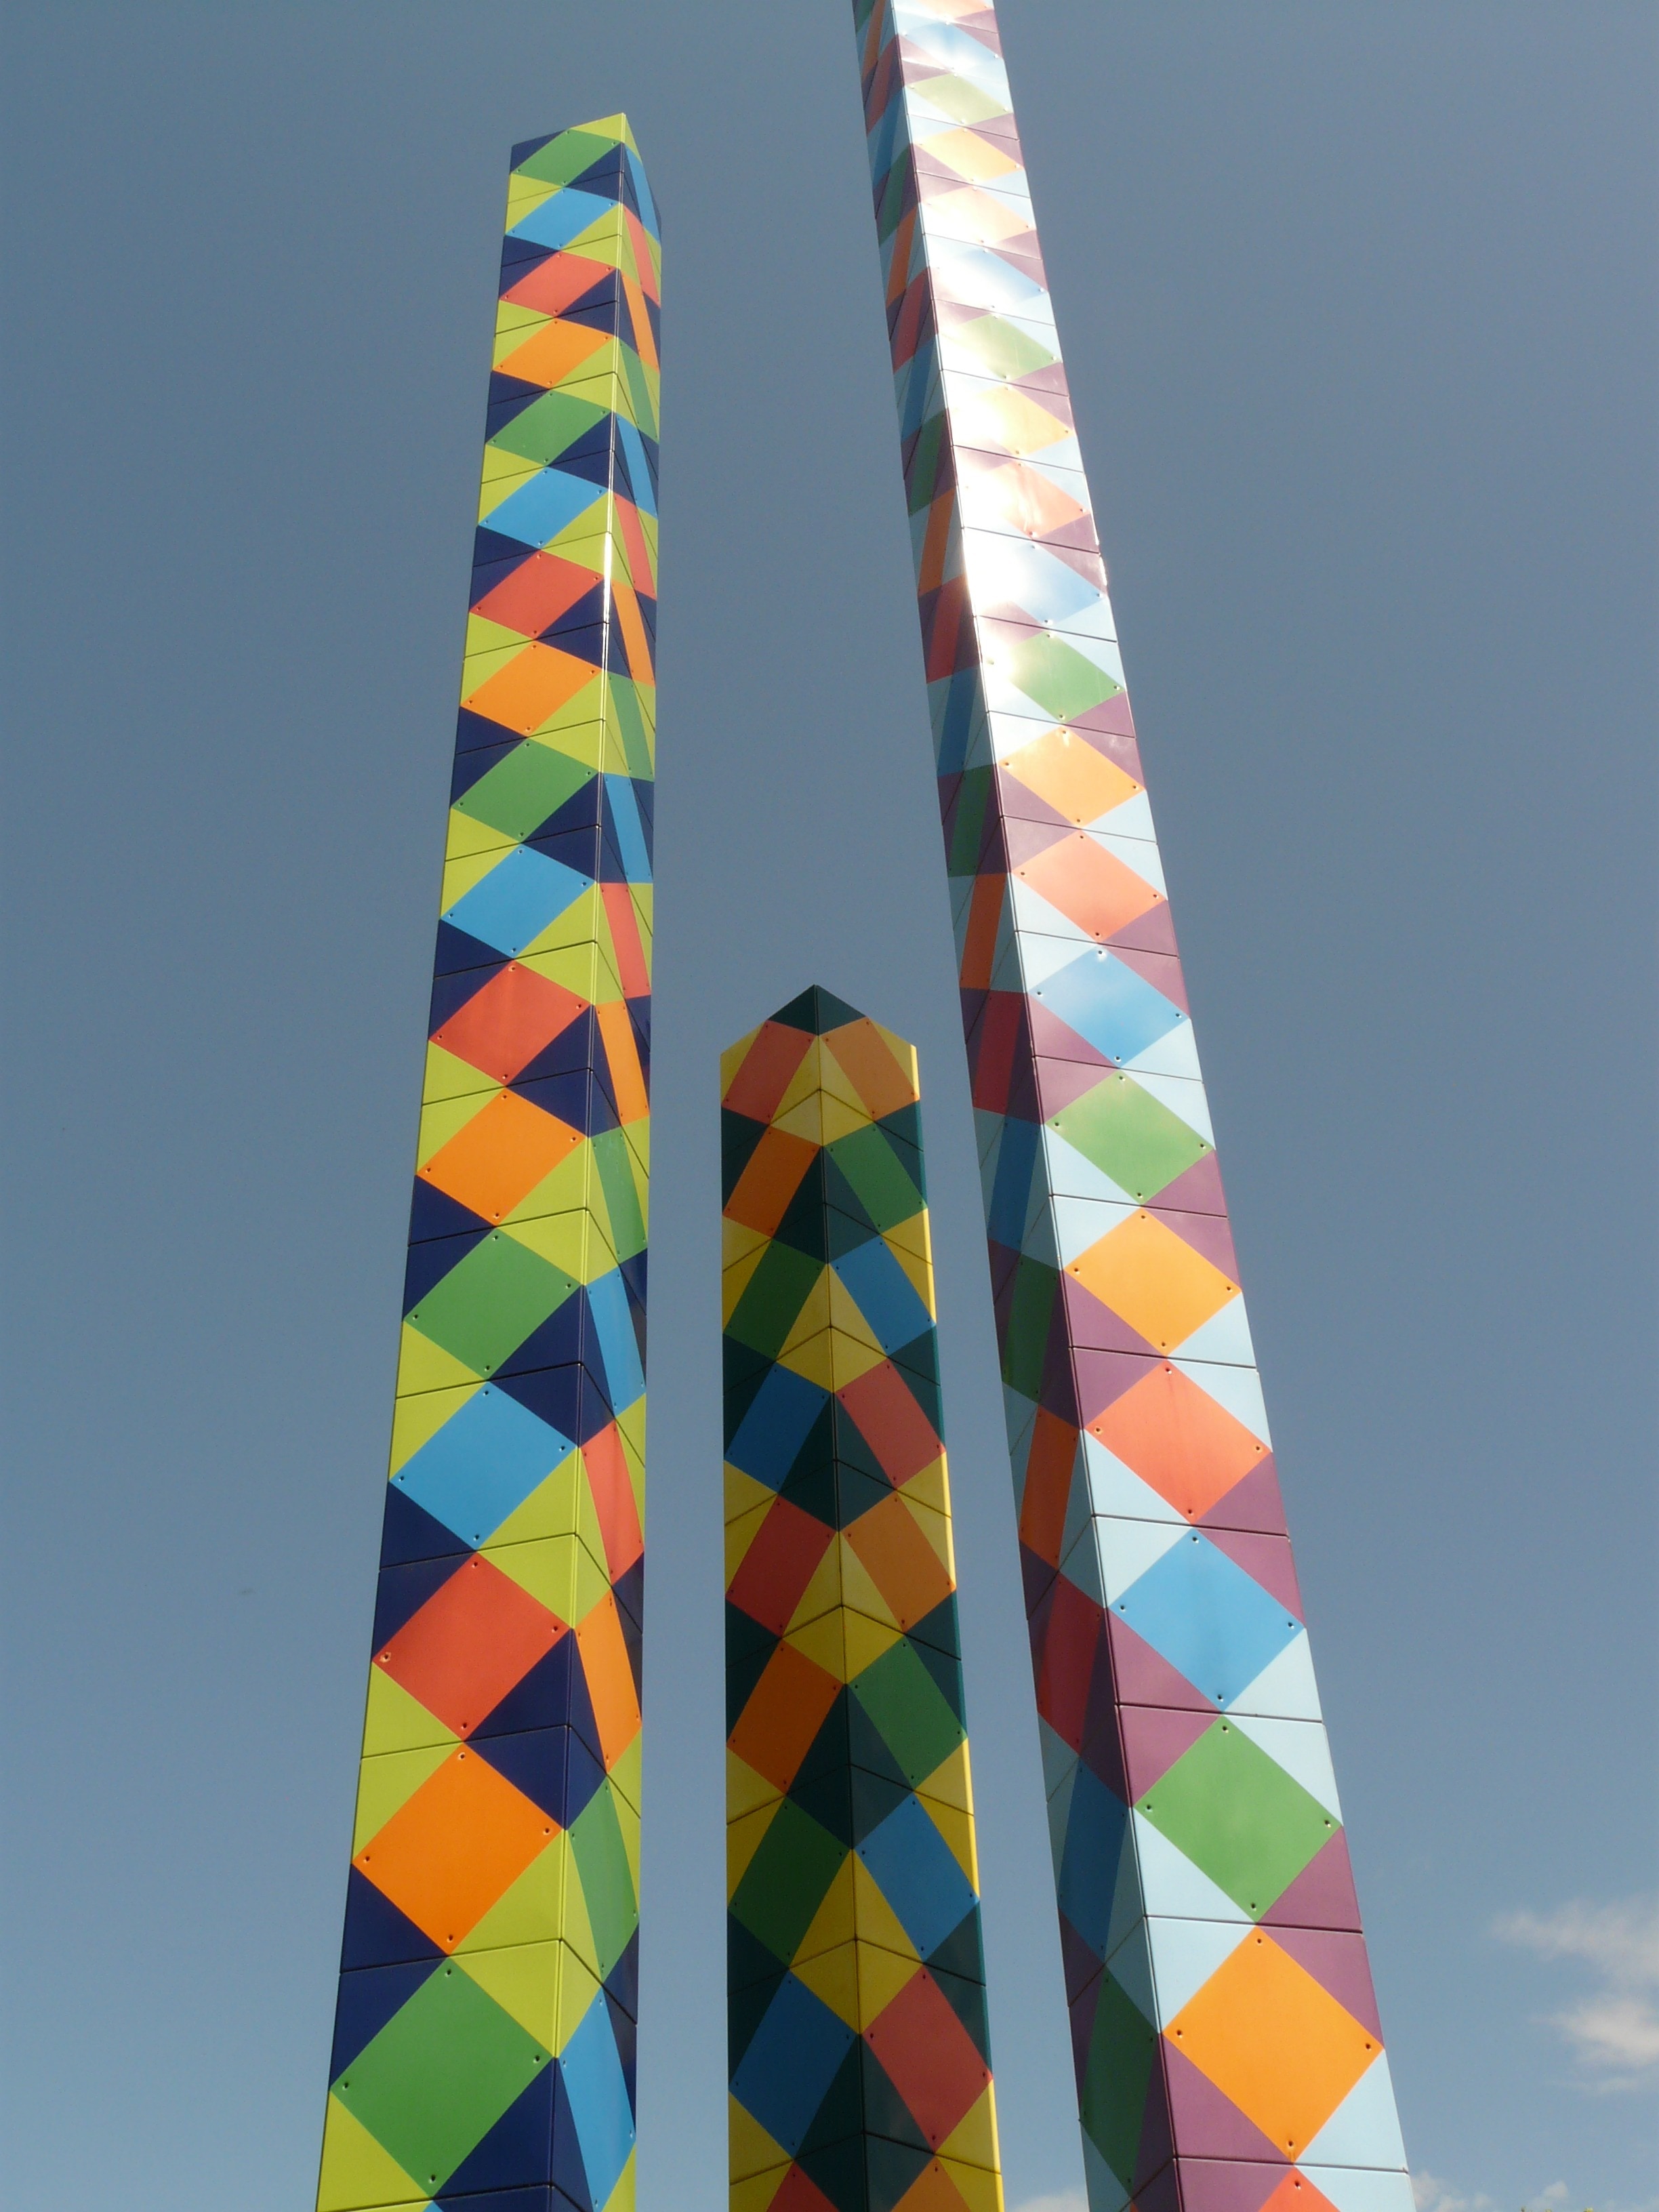 three multicolored towers